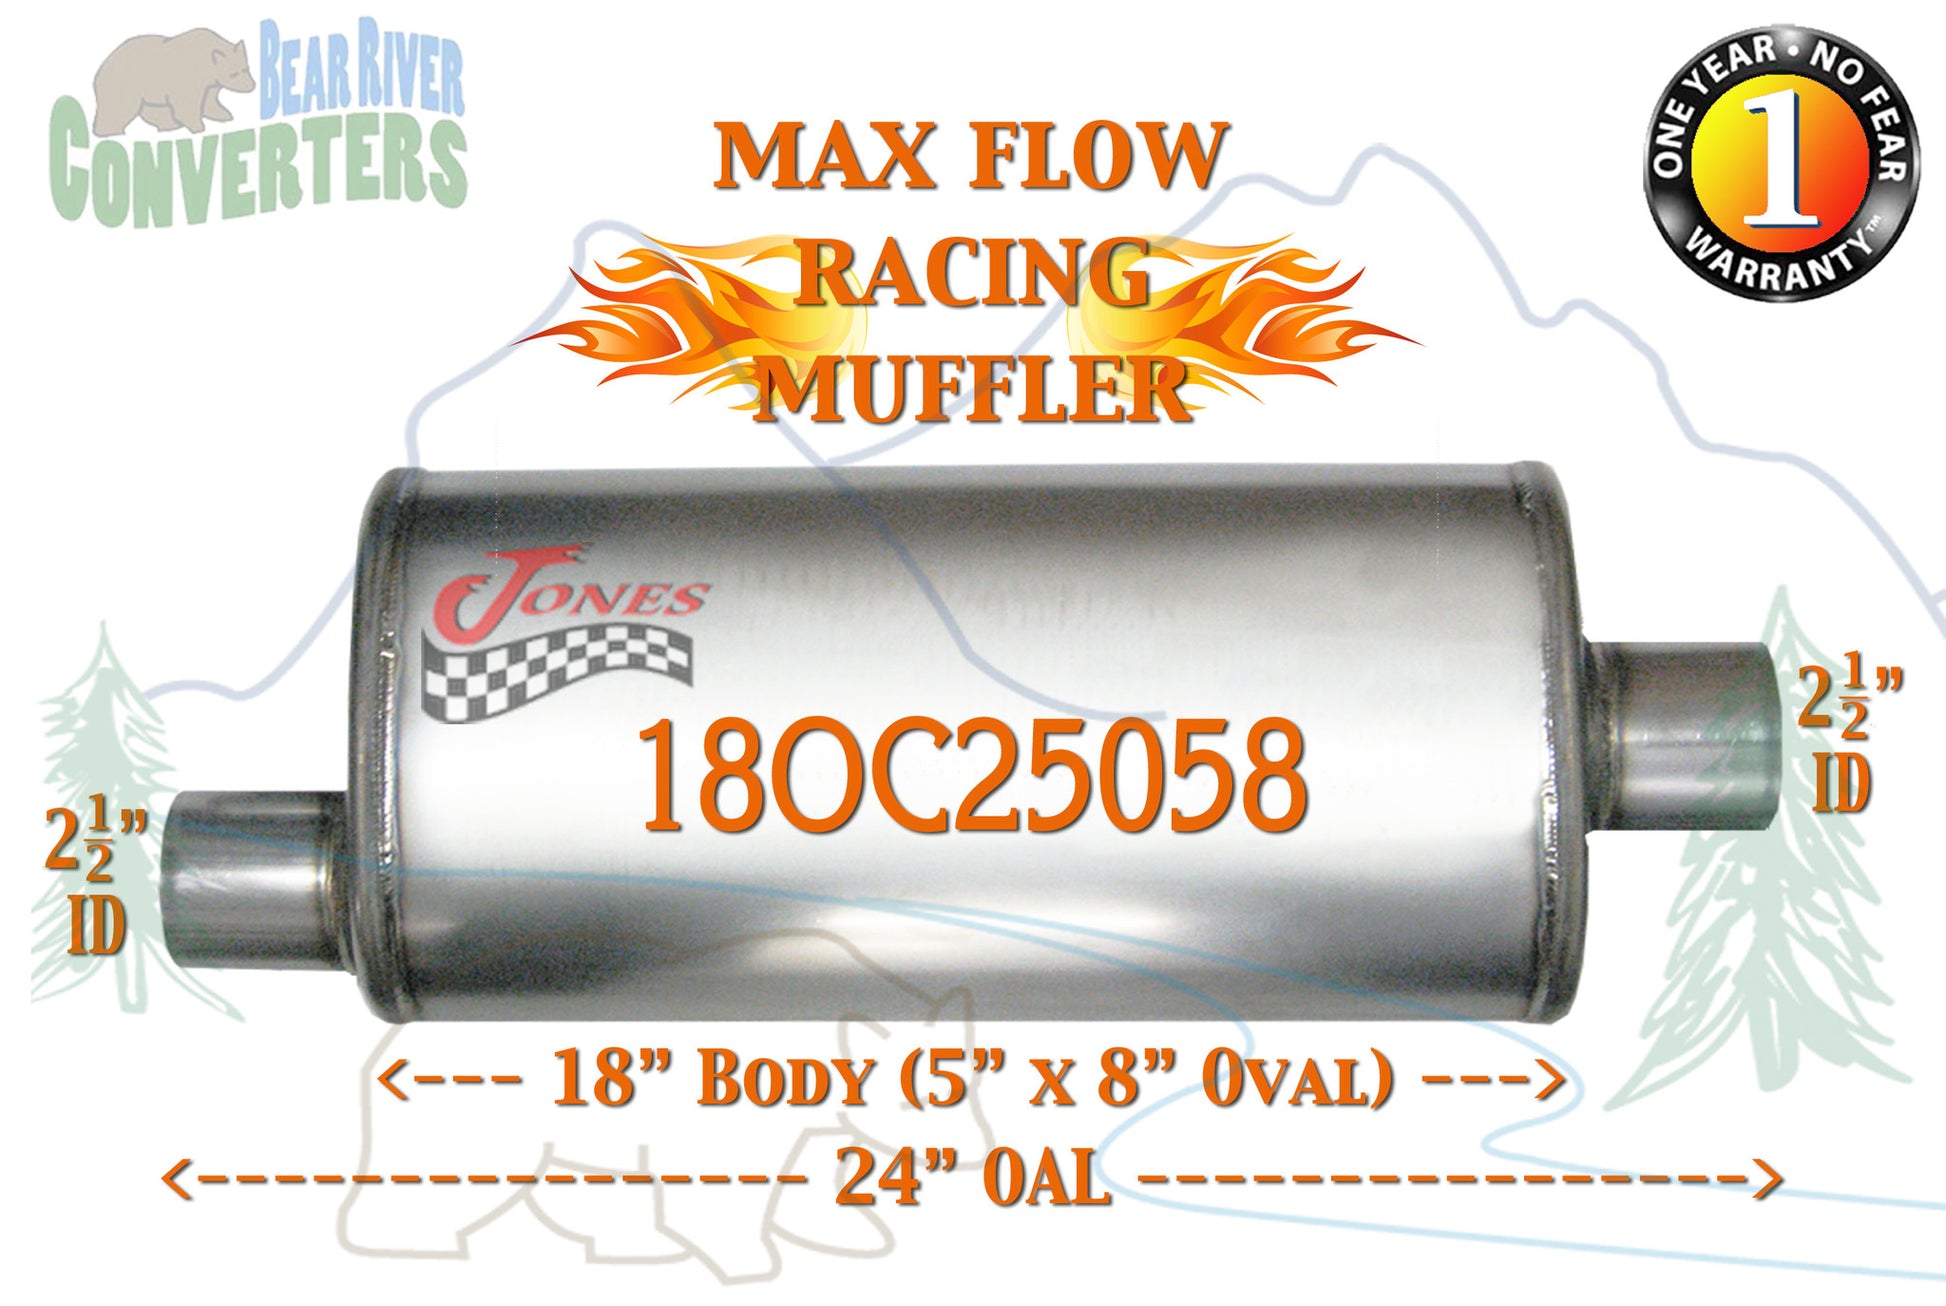 18OC25058 Jones MF2256 Max Flow Racing Muffler 18” Oval Body 2 1/2” 2.5” Pipe Offset/Center 24” OAL - Bear River Converters